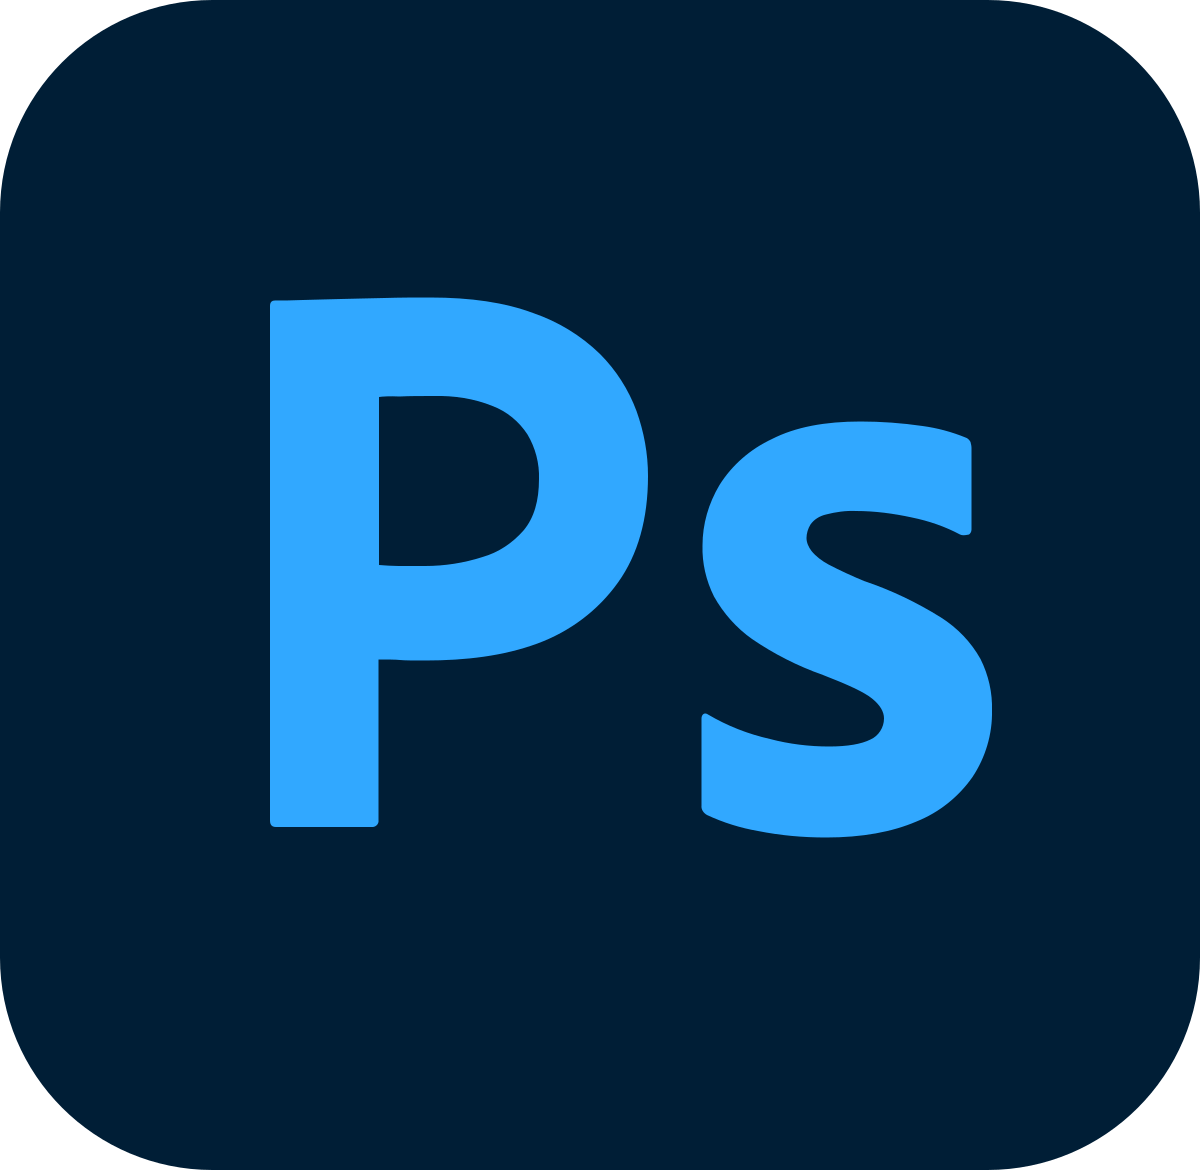 Adobe Photoshop CC icon.svg 1